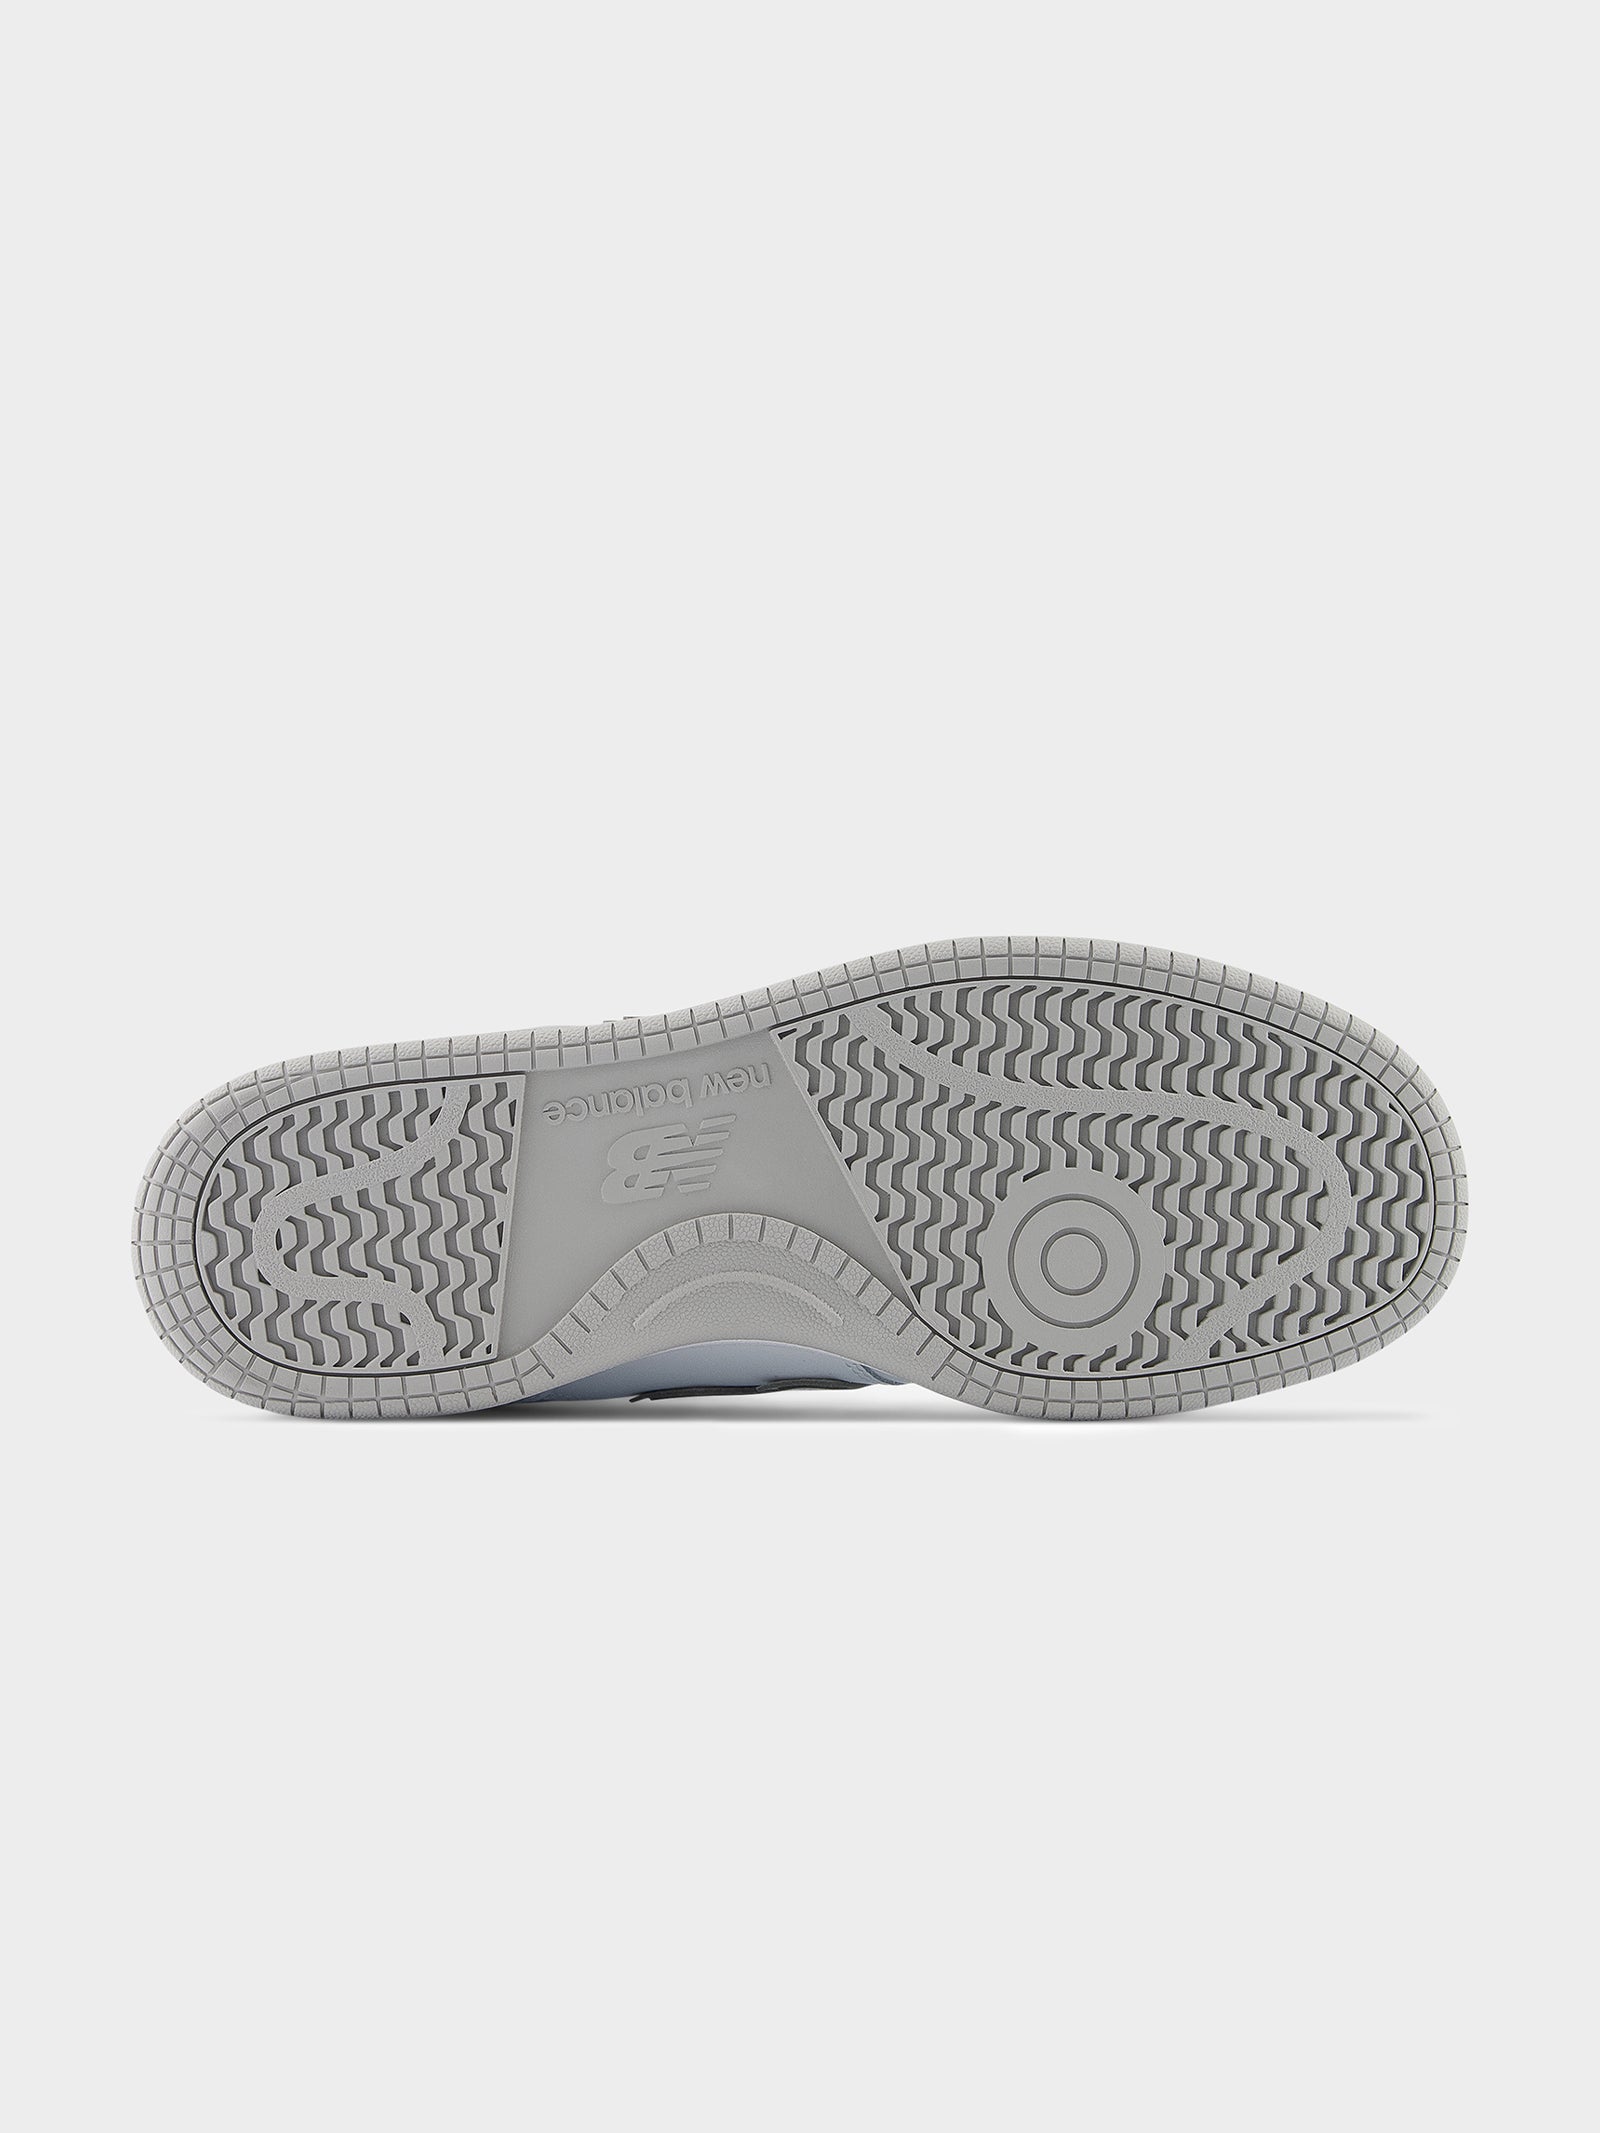 Unisex 480 Sneakers in White & Grey